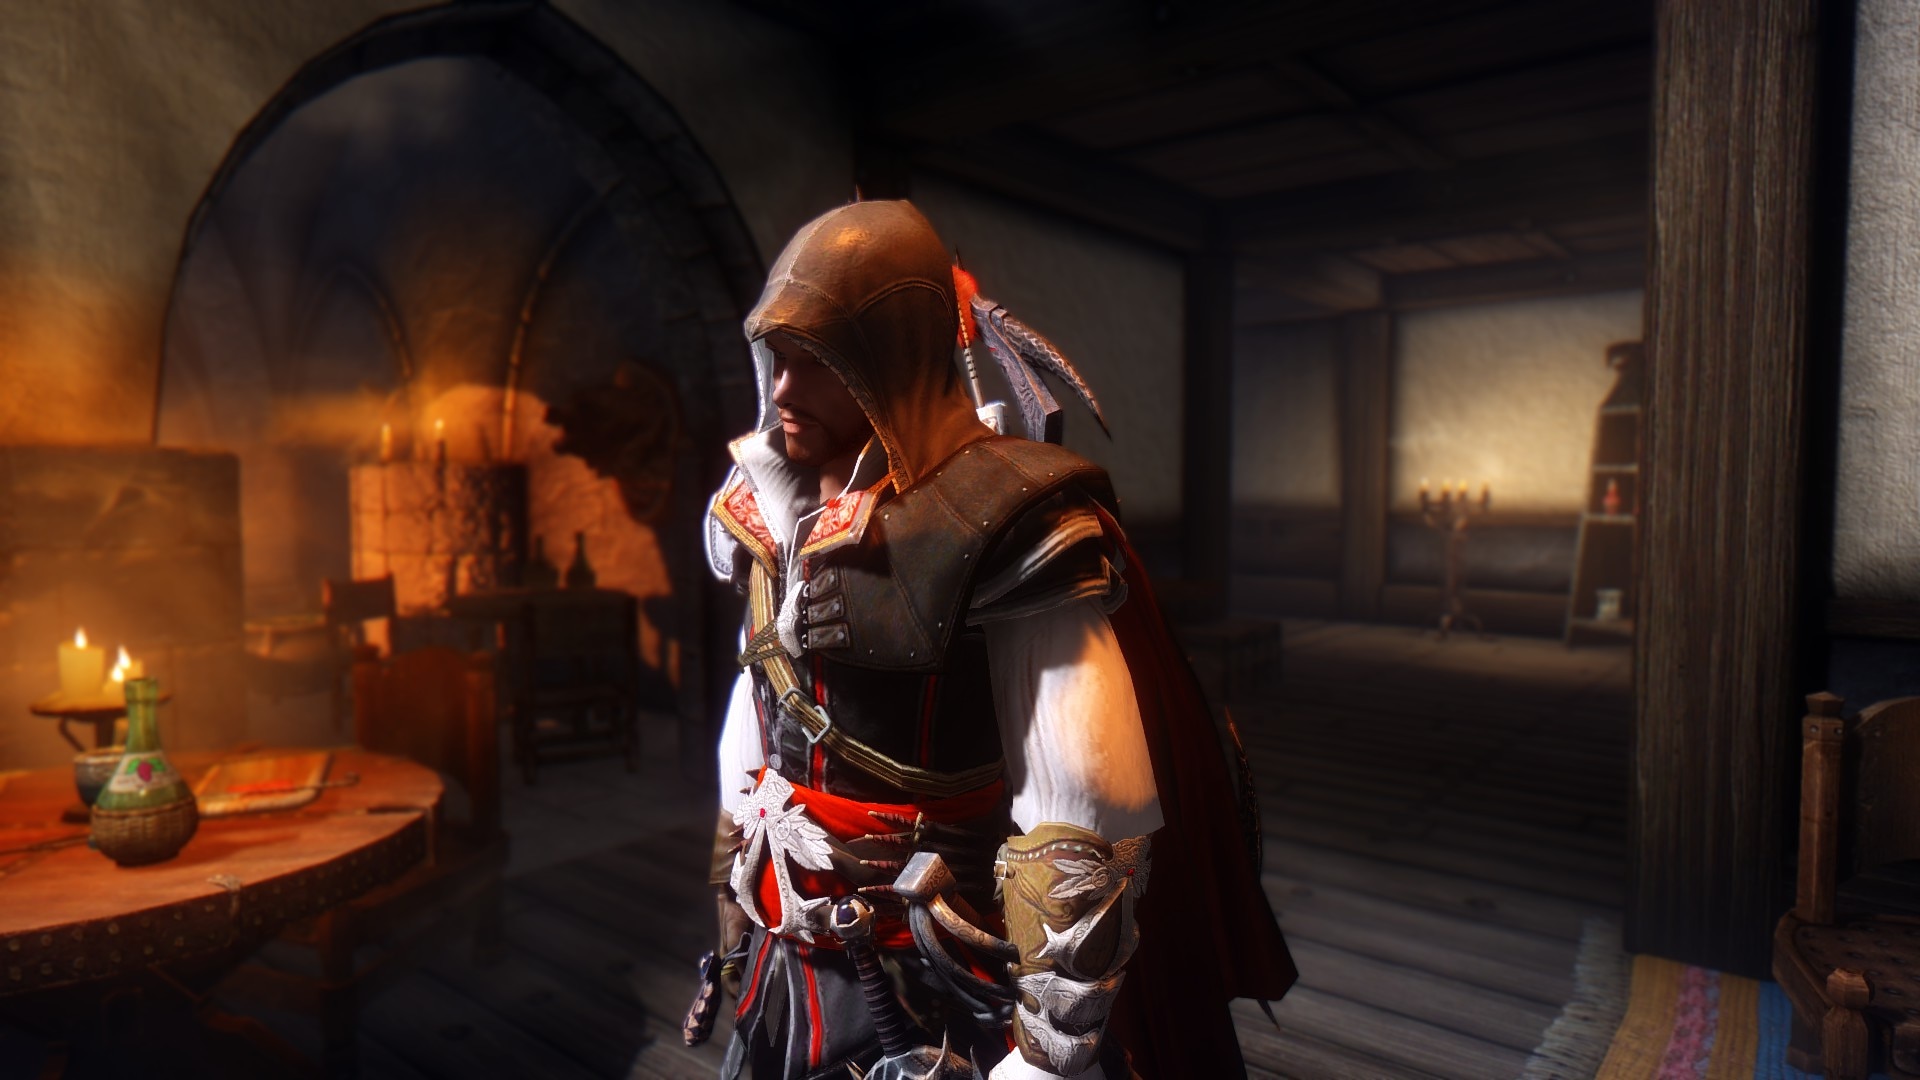 Assassin's Creed 2 E3 2009 outift MOD 